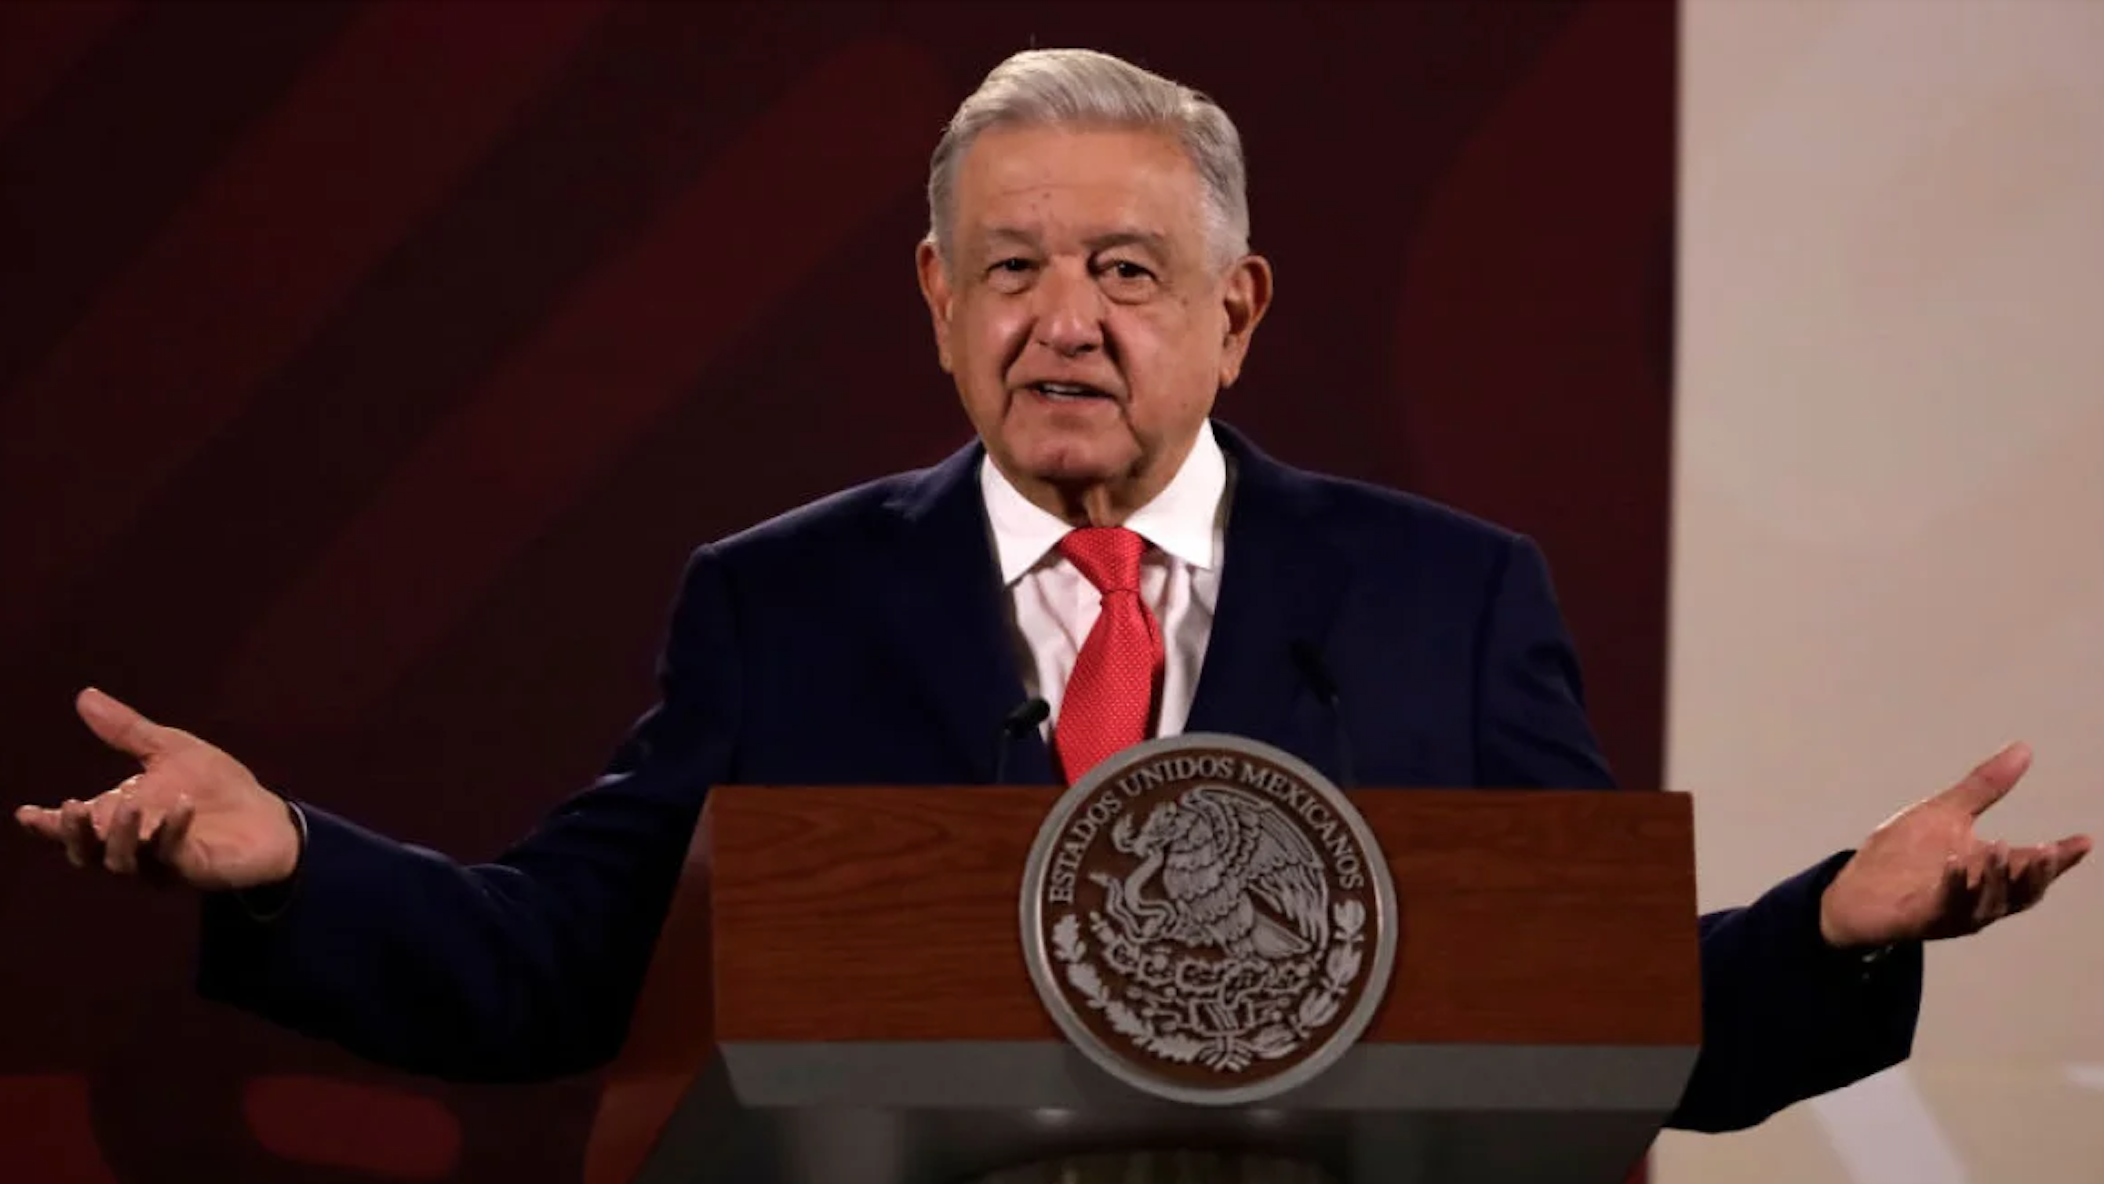 López Obrador criticizes Supreme Court president